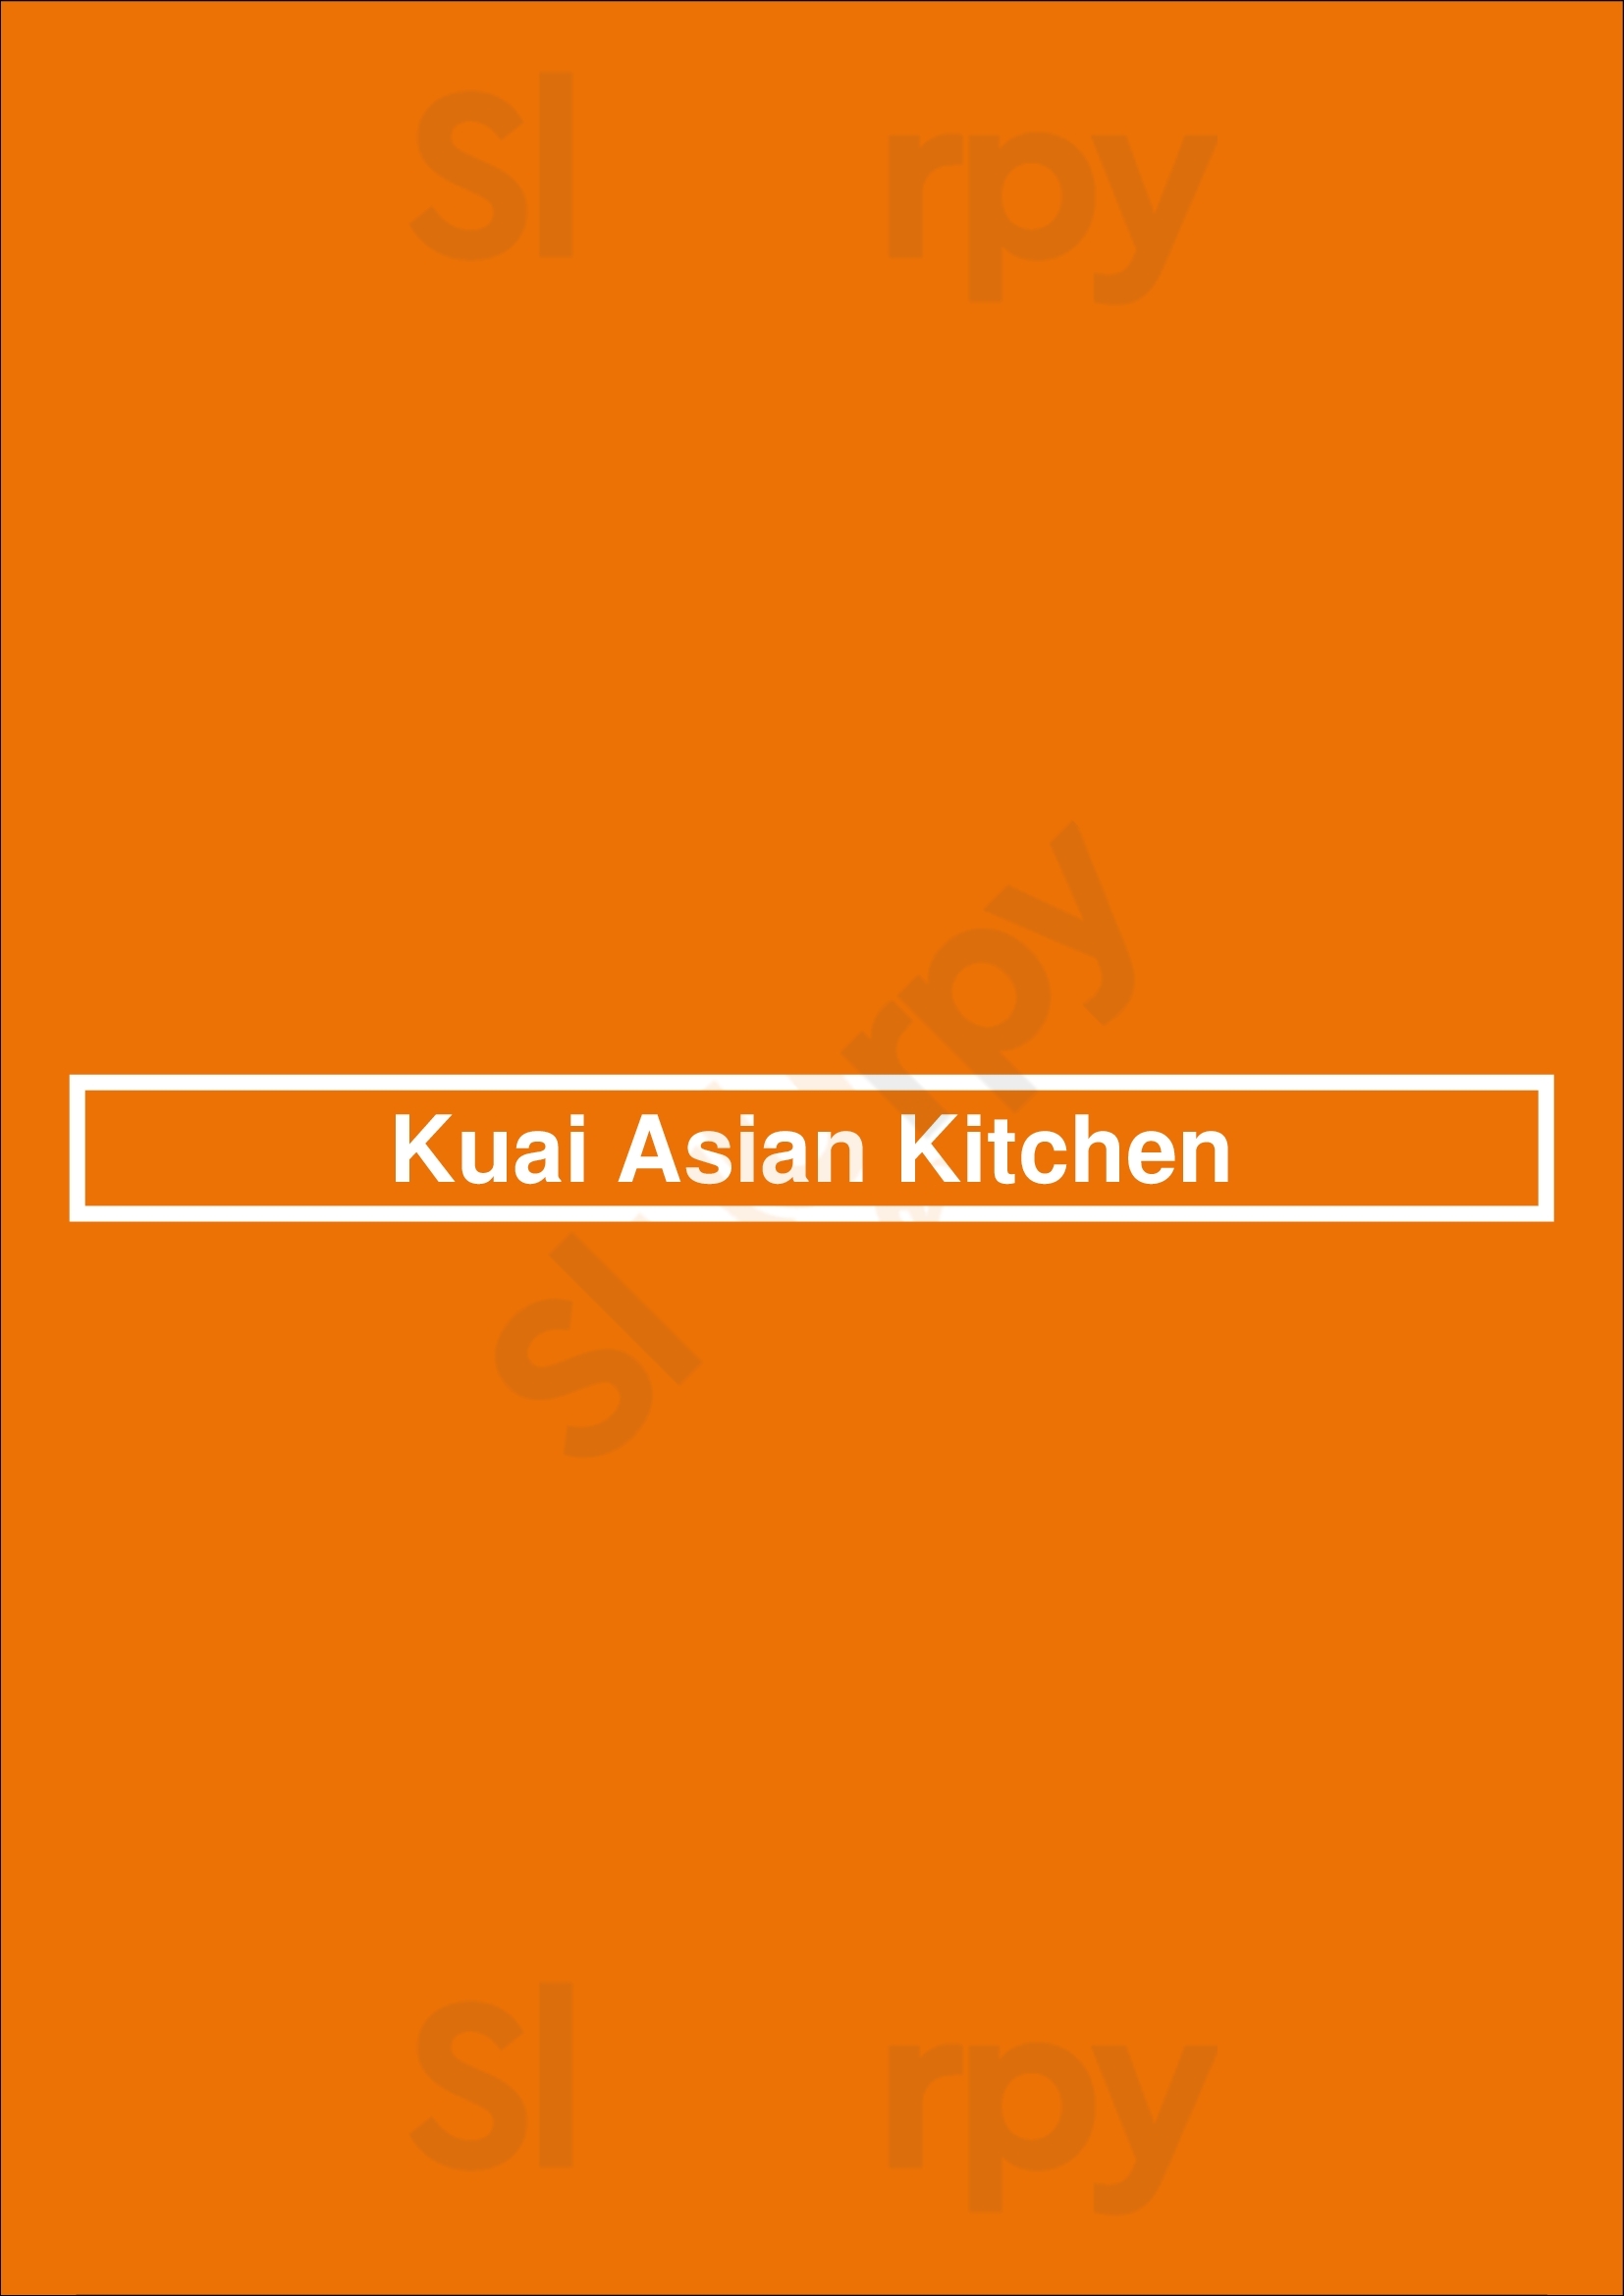 Kuai Asian Kitchen Dallas Menu - 1